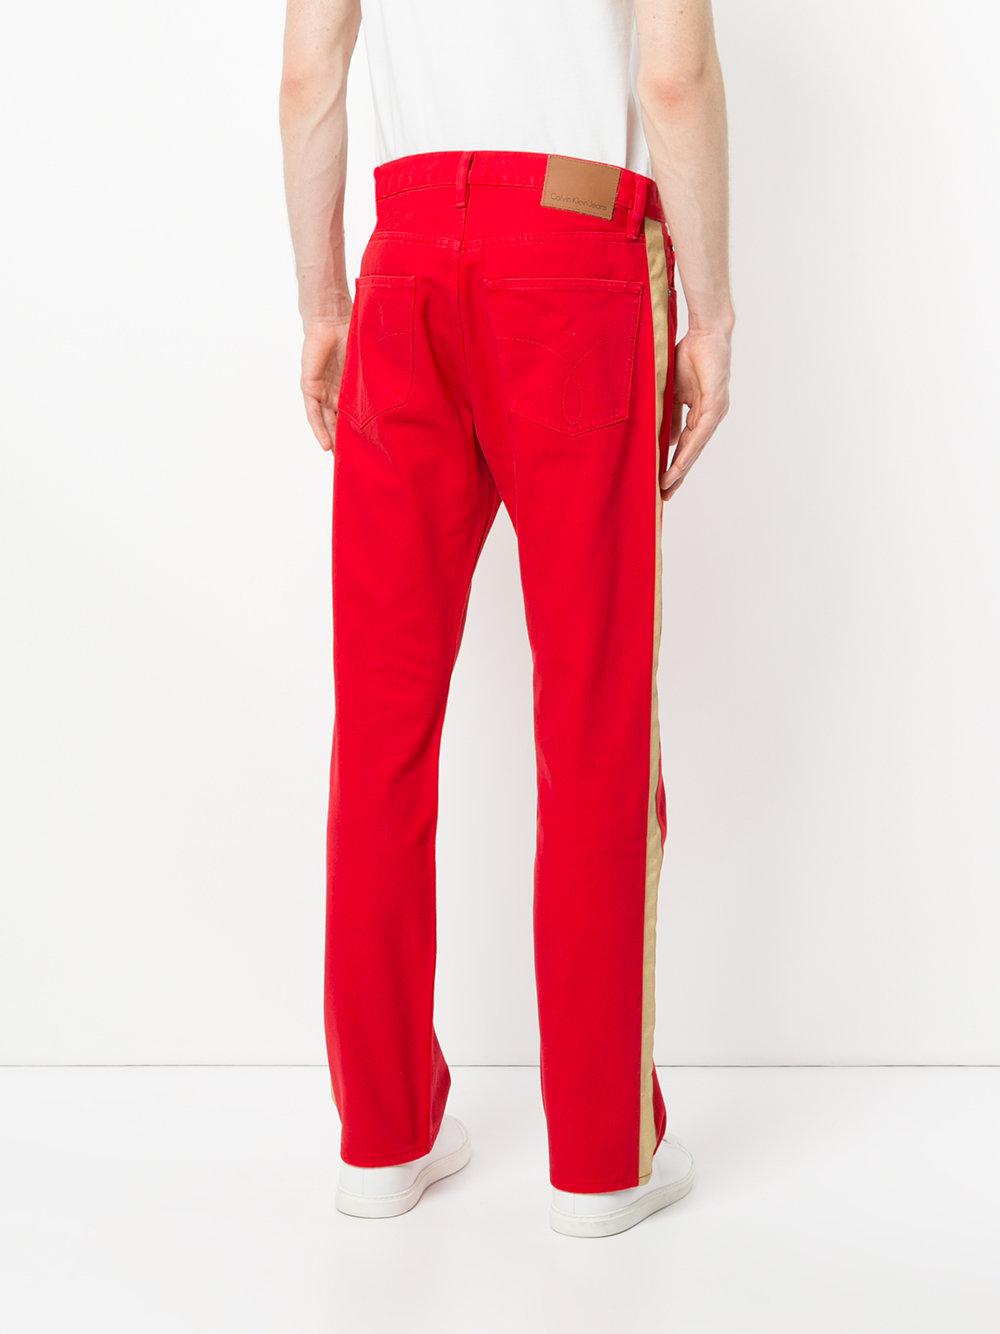 Calvin Klein Denim Side Stripe Jeans in Red for Men - Lyst